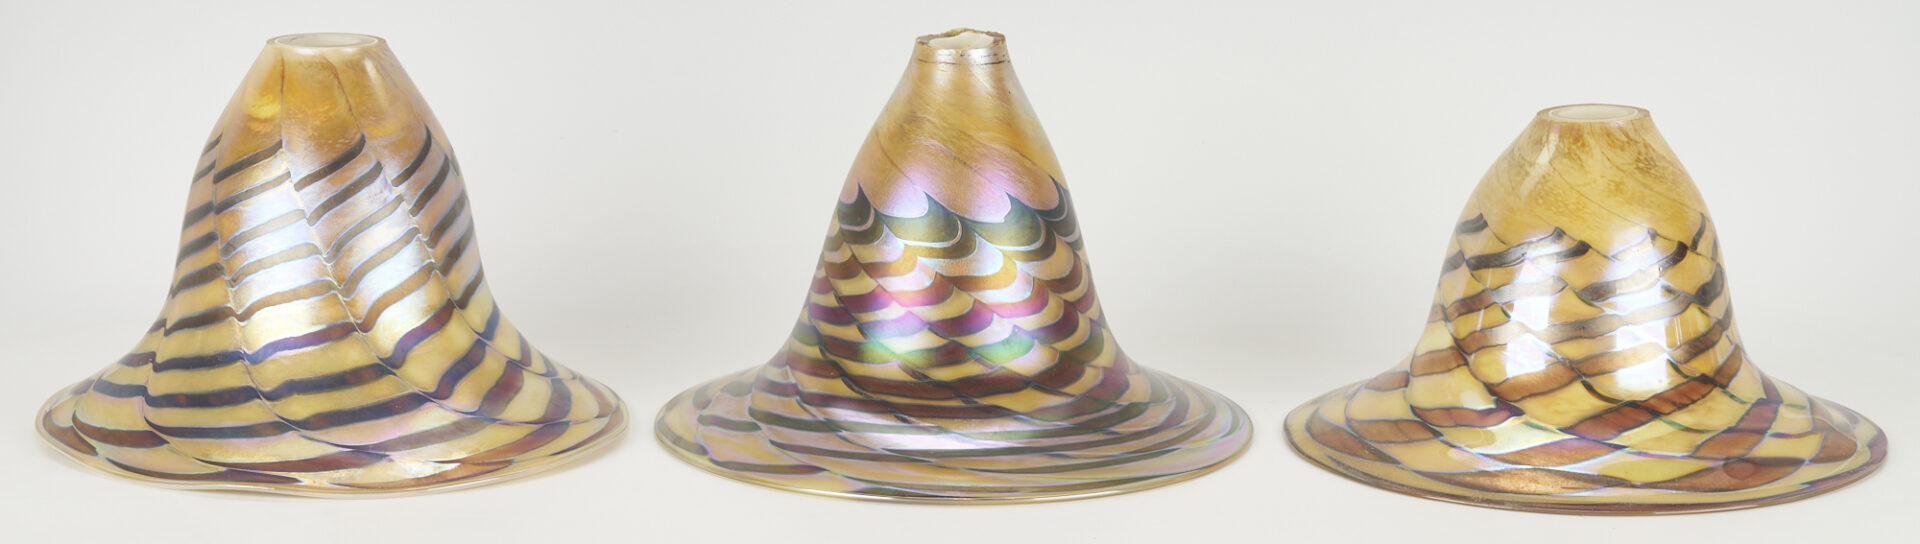 Lot 461: 5 Studio Art Glass Lamp Shades